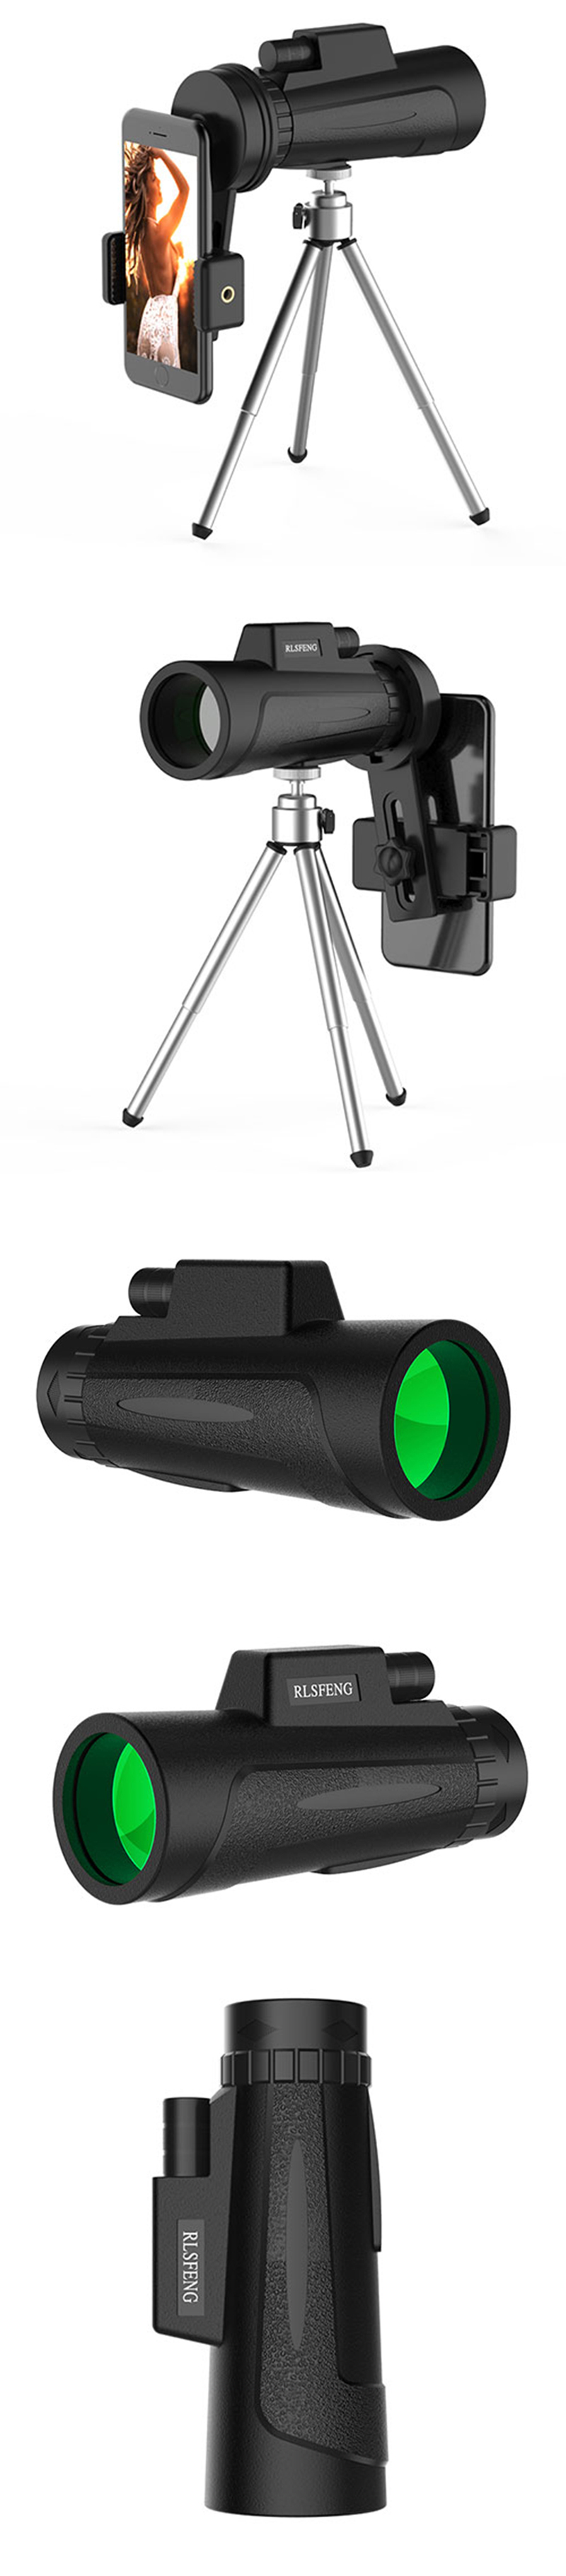 IPReereg-12X50-Monocular-HD-Full-Optic-BAK4-Lens-Day-Night-Vision-Waterproof-TelescopePhone-HolderTr-1450184-1